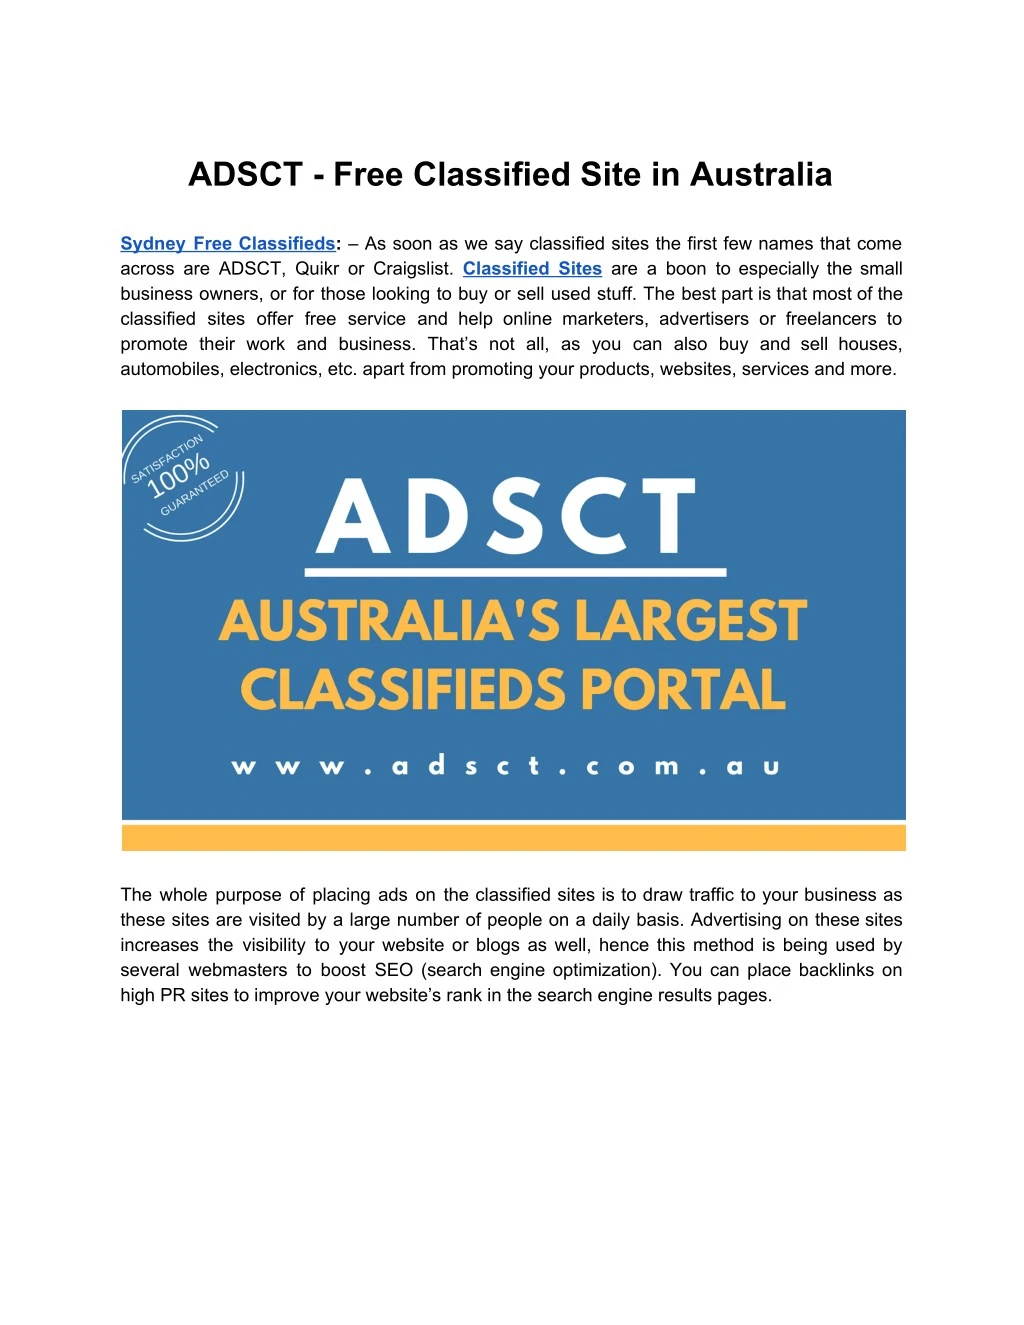 adsct free classified site in australia